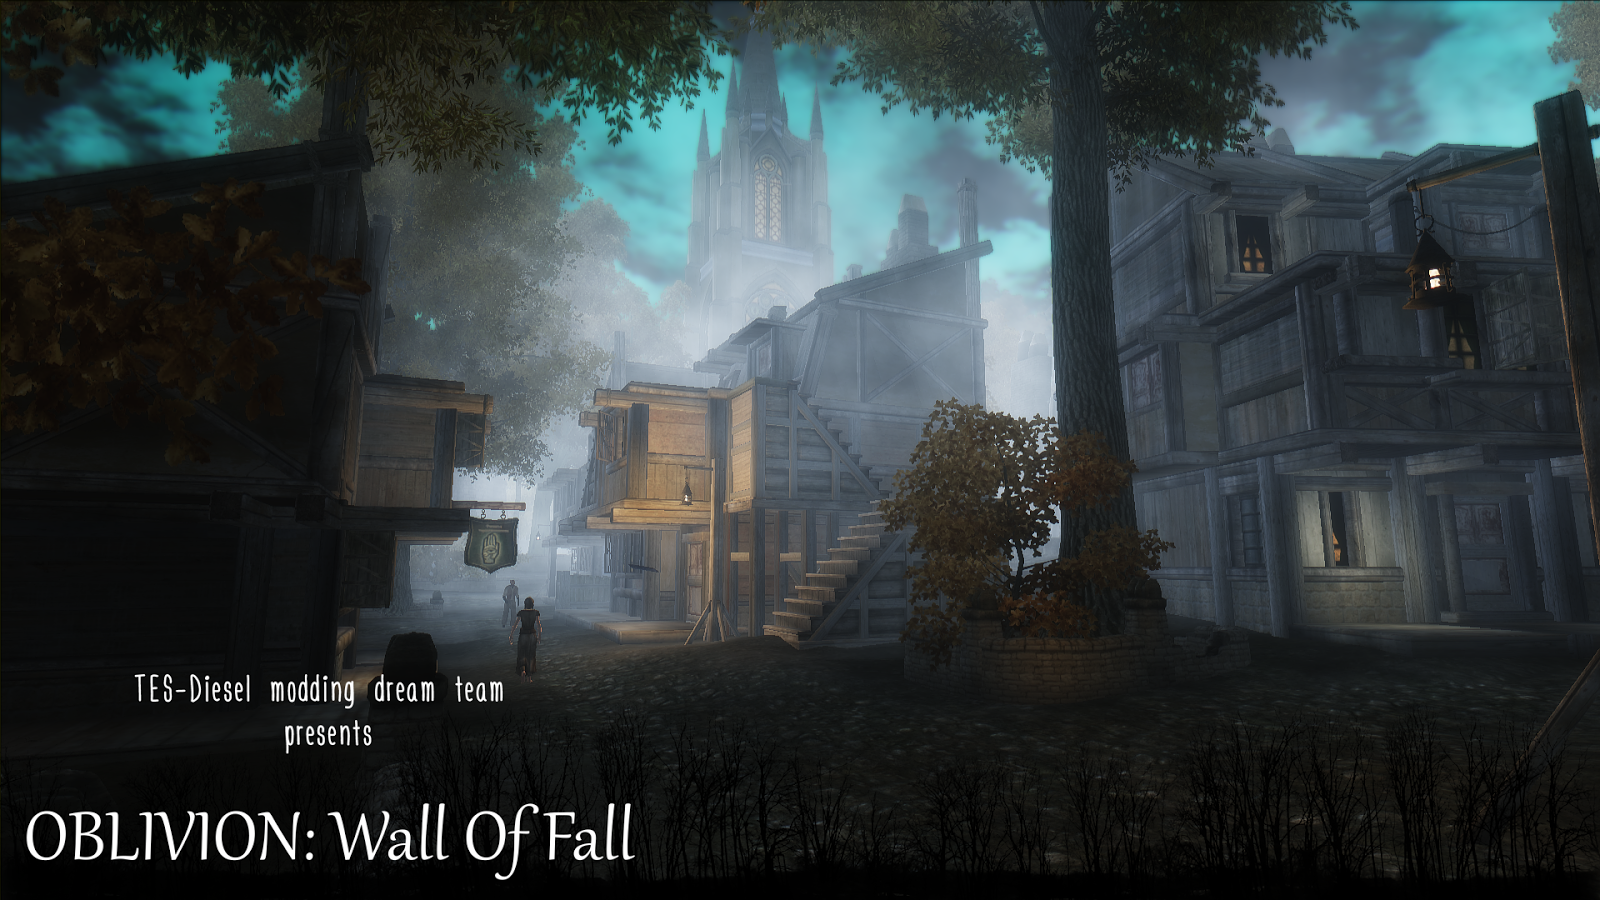 Wall fall